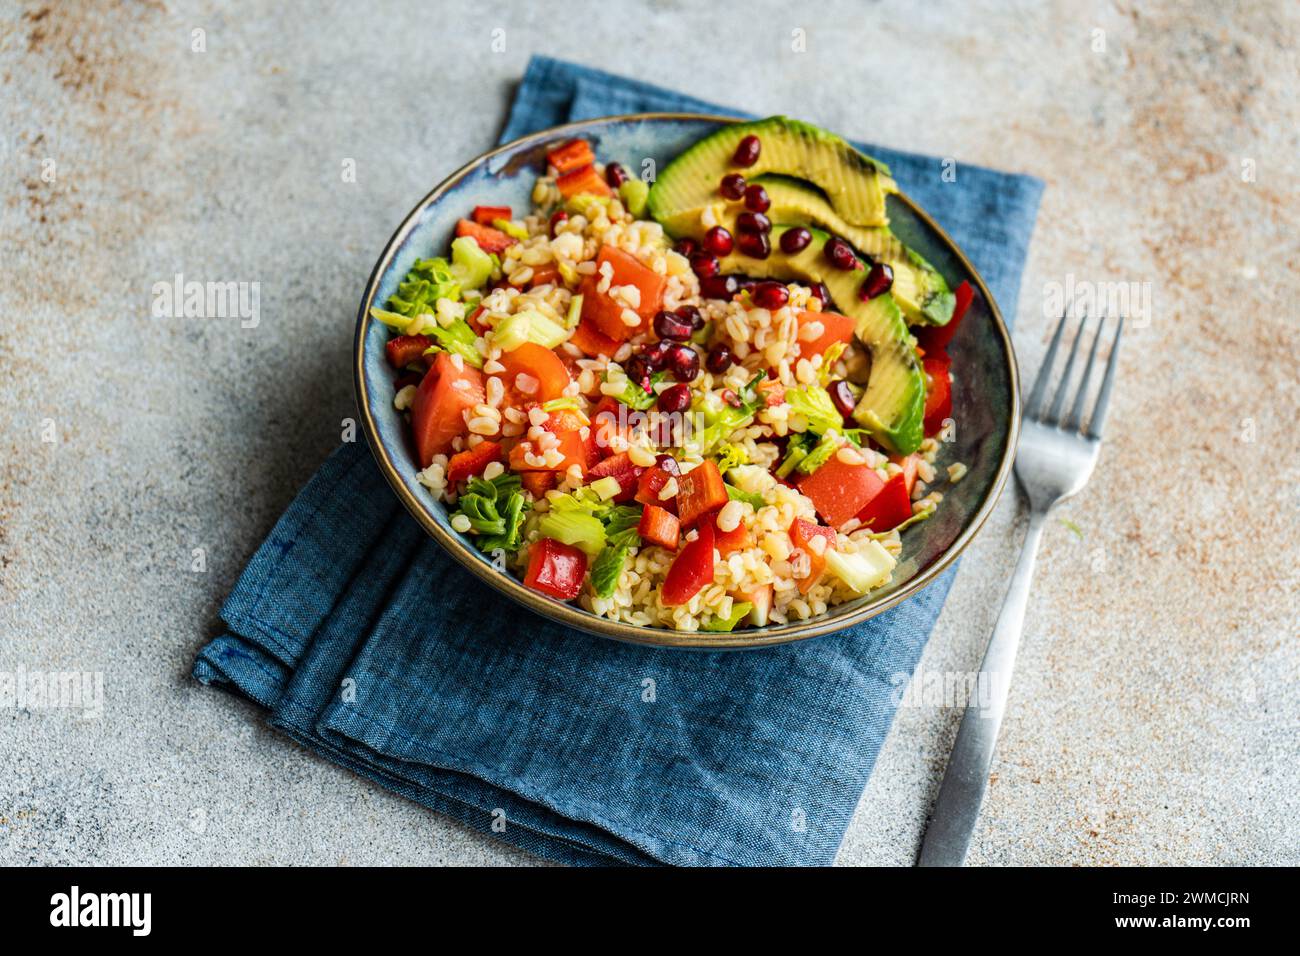 Close-up of a bulgur wheat, avocado, tomato, red pepper and pomegranate salad Stock Photo